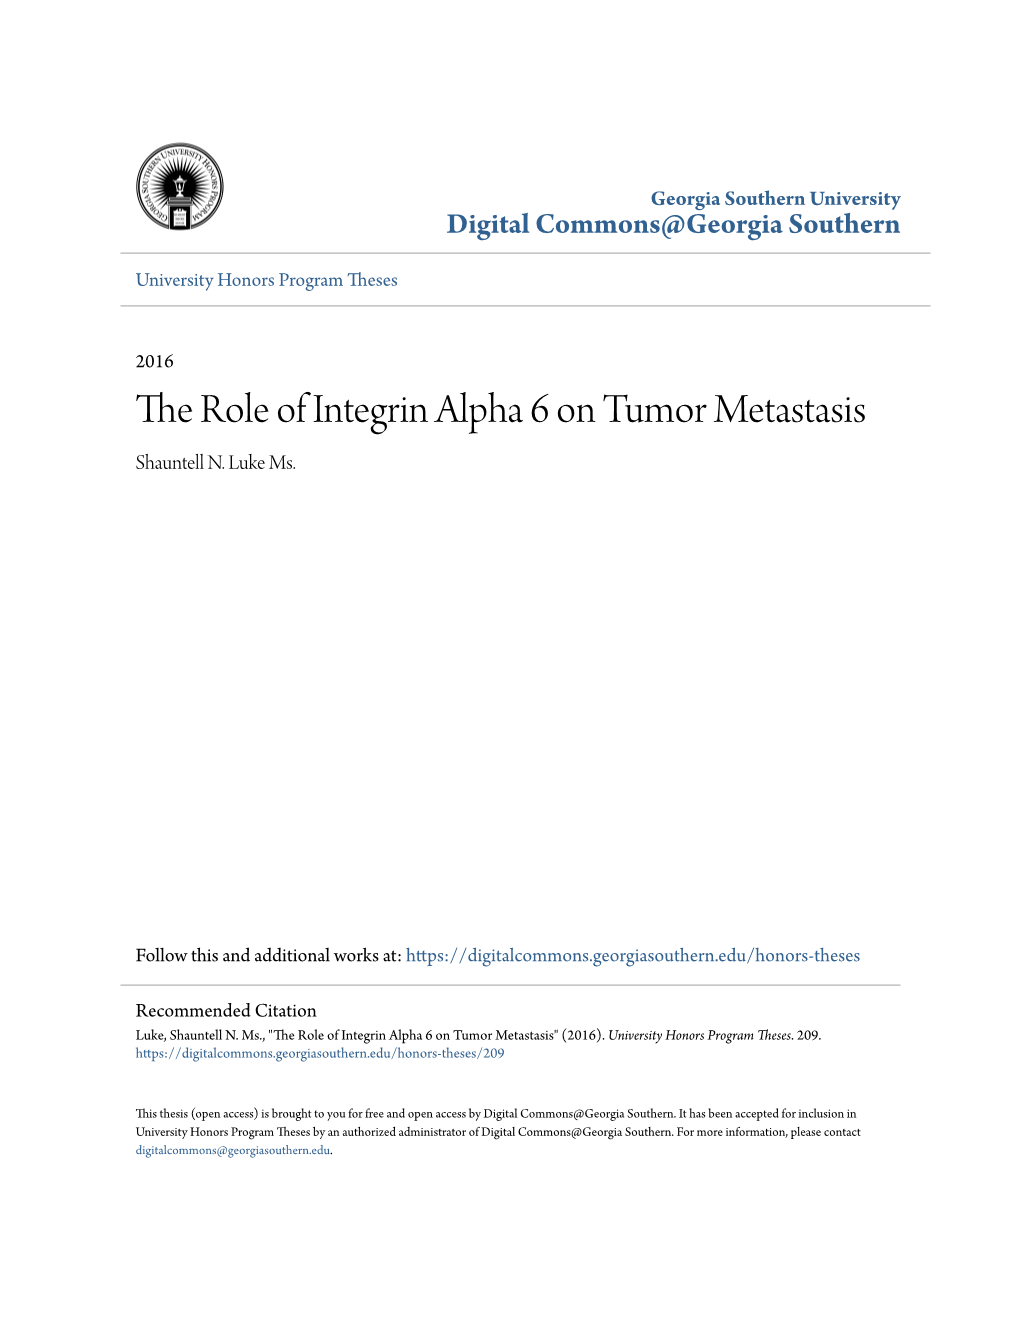 The Role of Integrin Alpha 6 on Tumor Metastasis Shauntell N